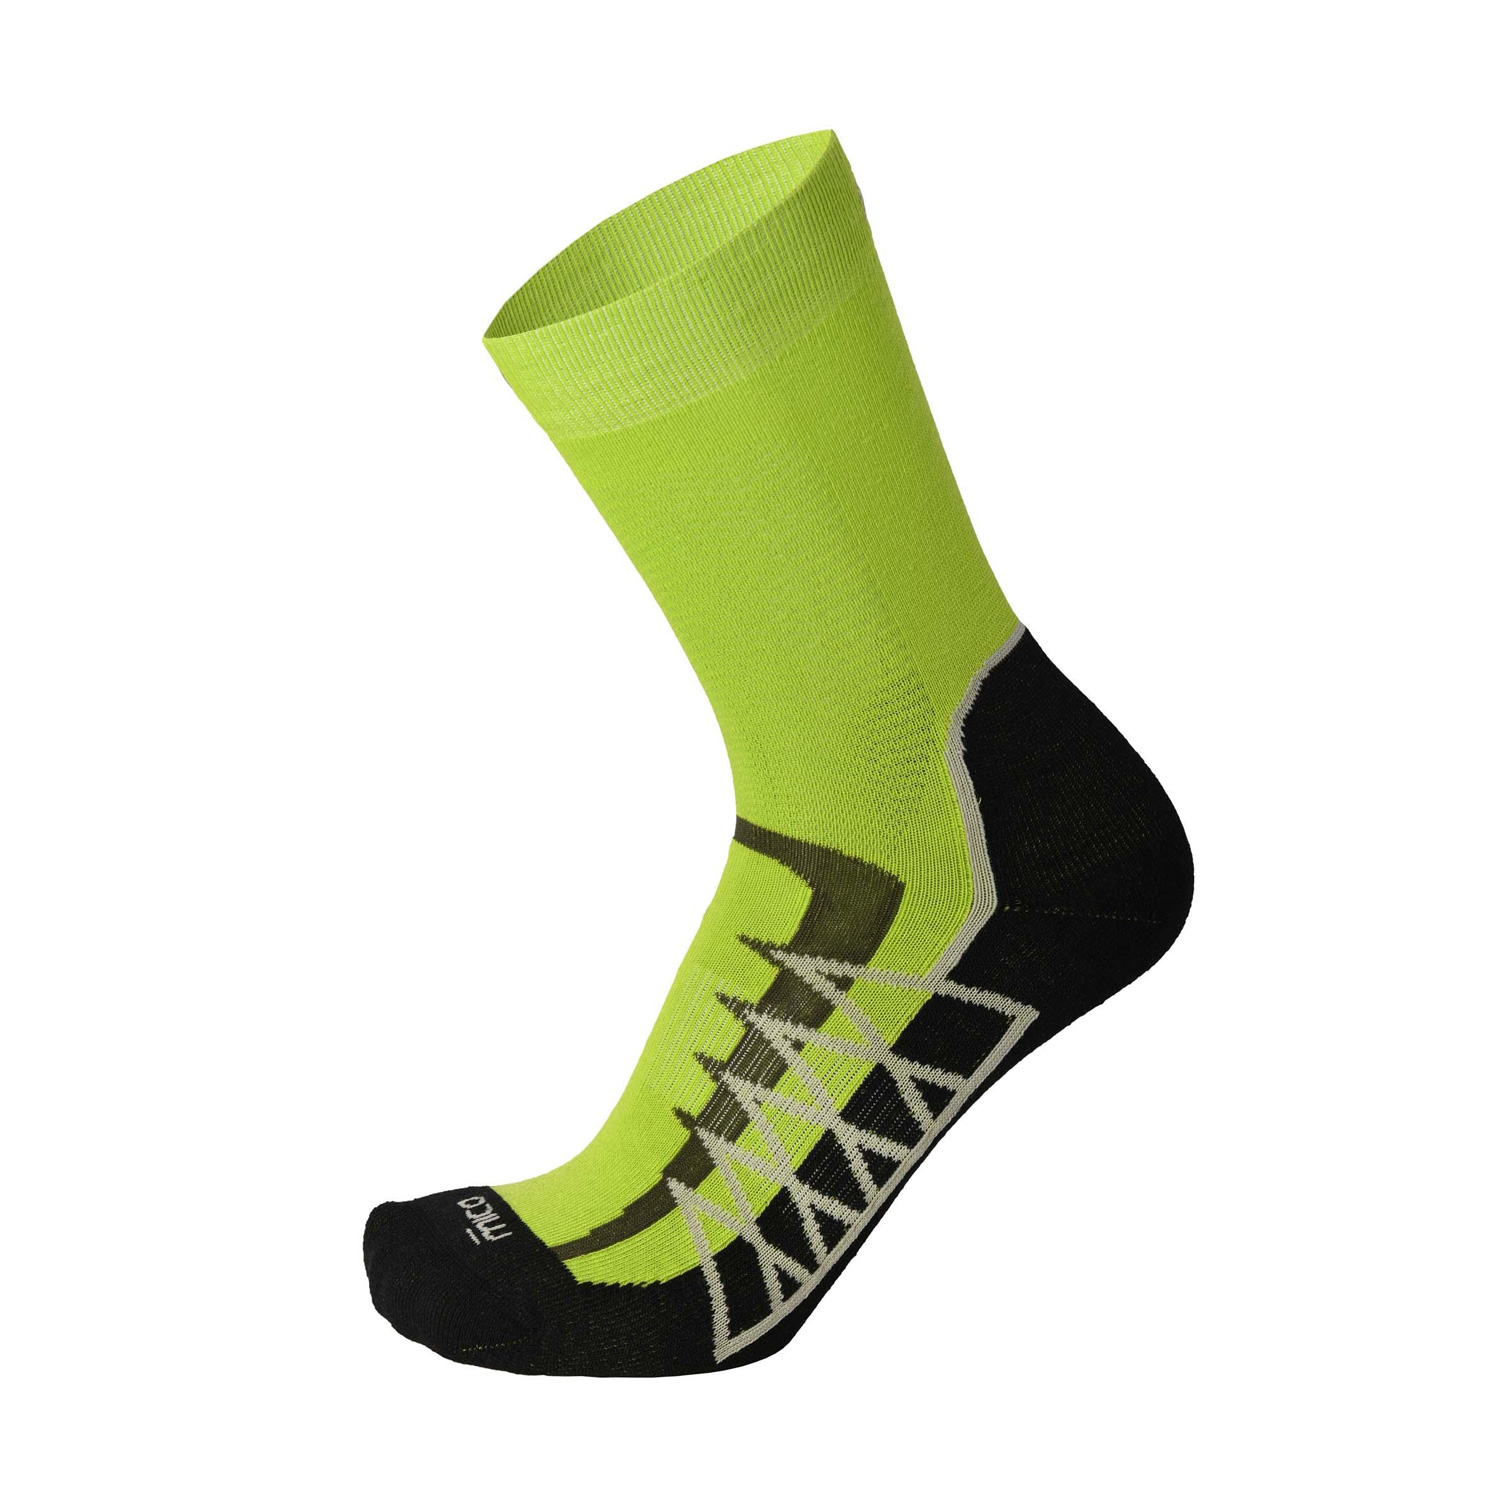 Mico Extra Dry Outlast Medium Weight Socks - Cedro